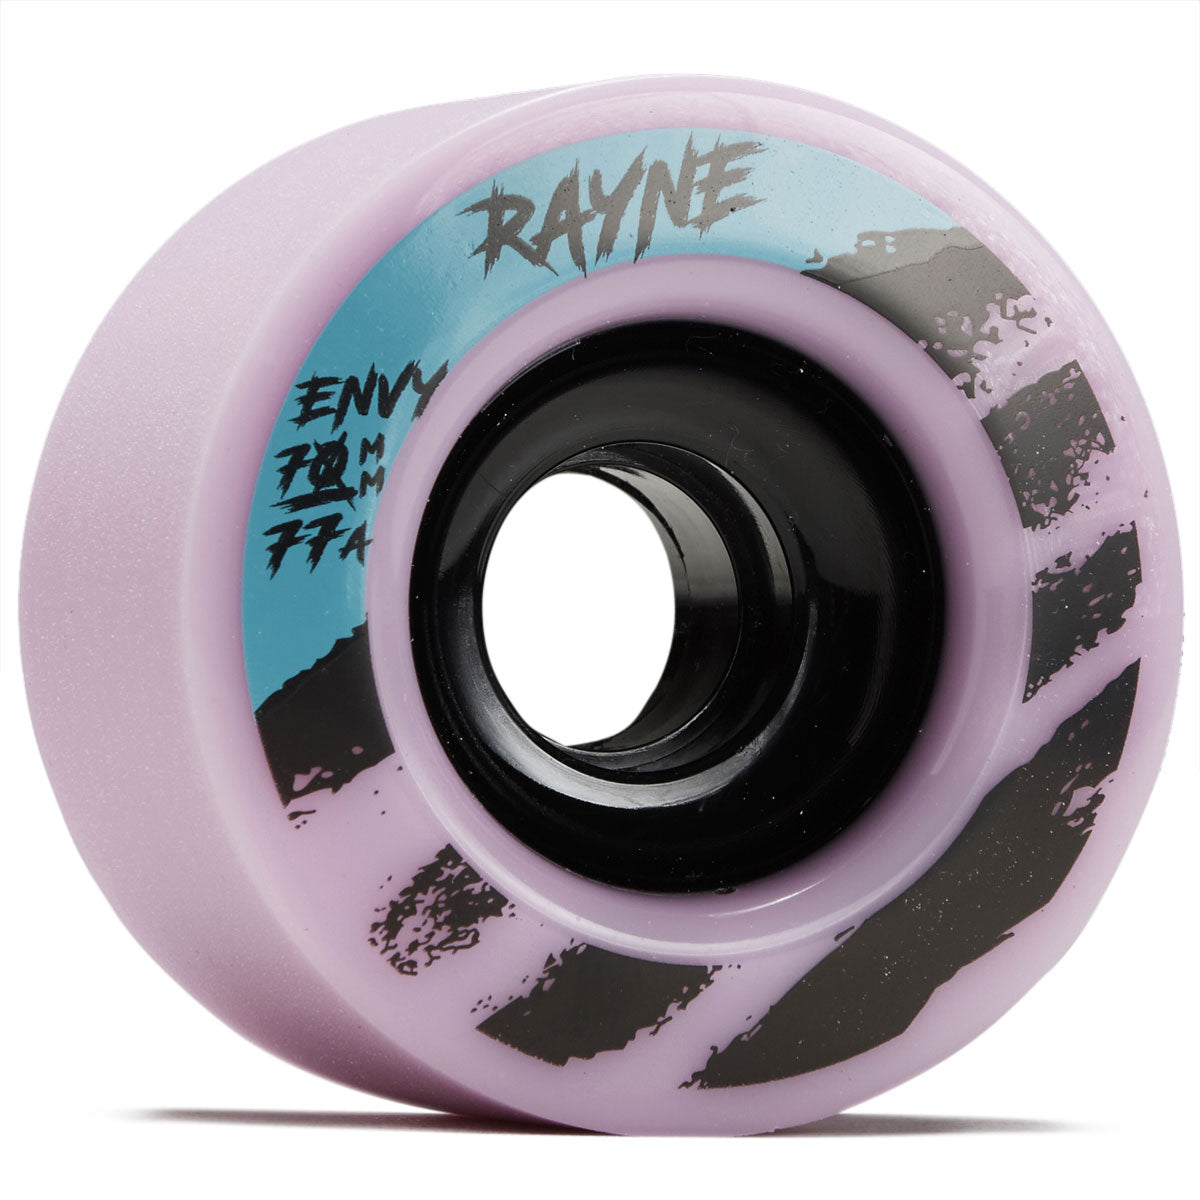 Rayne Envy V2 77a Longboard Wheels - Pink Jelly - 70mm image 1